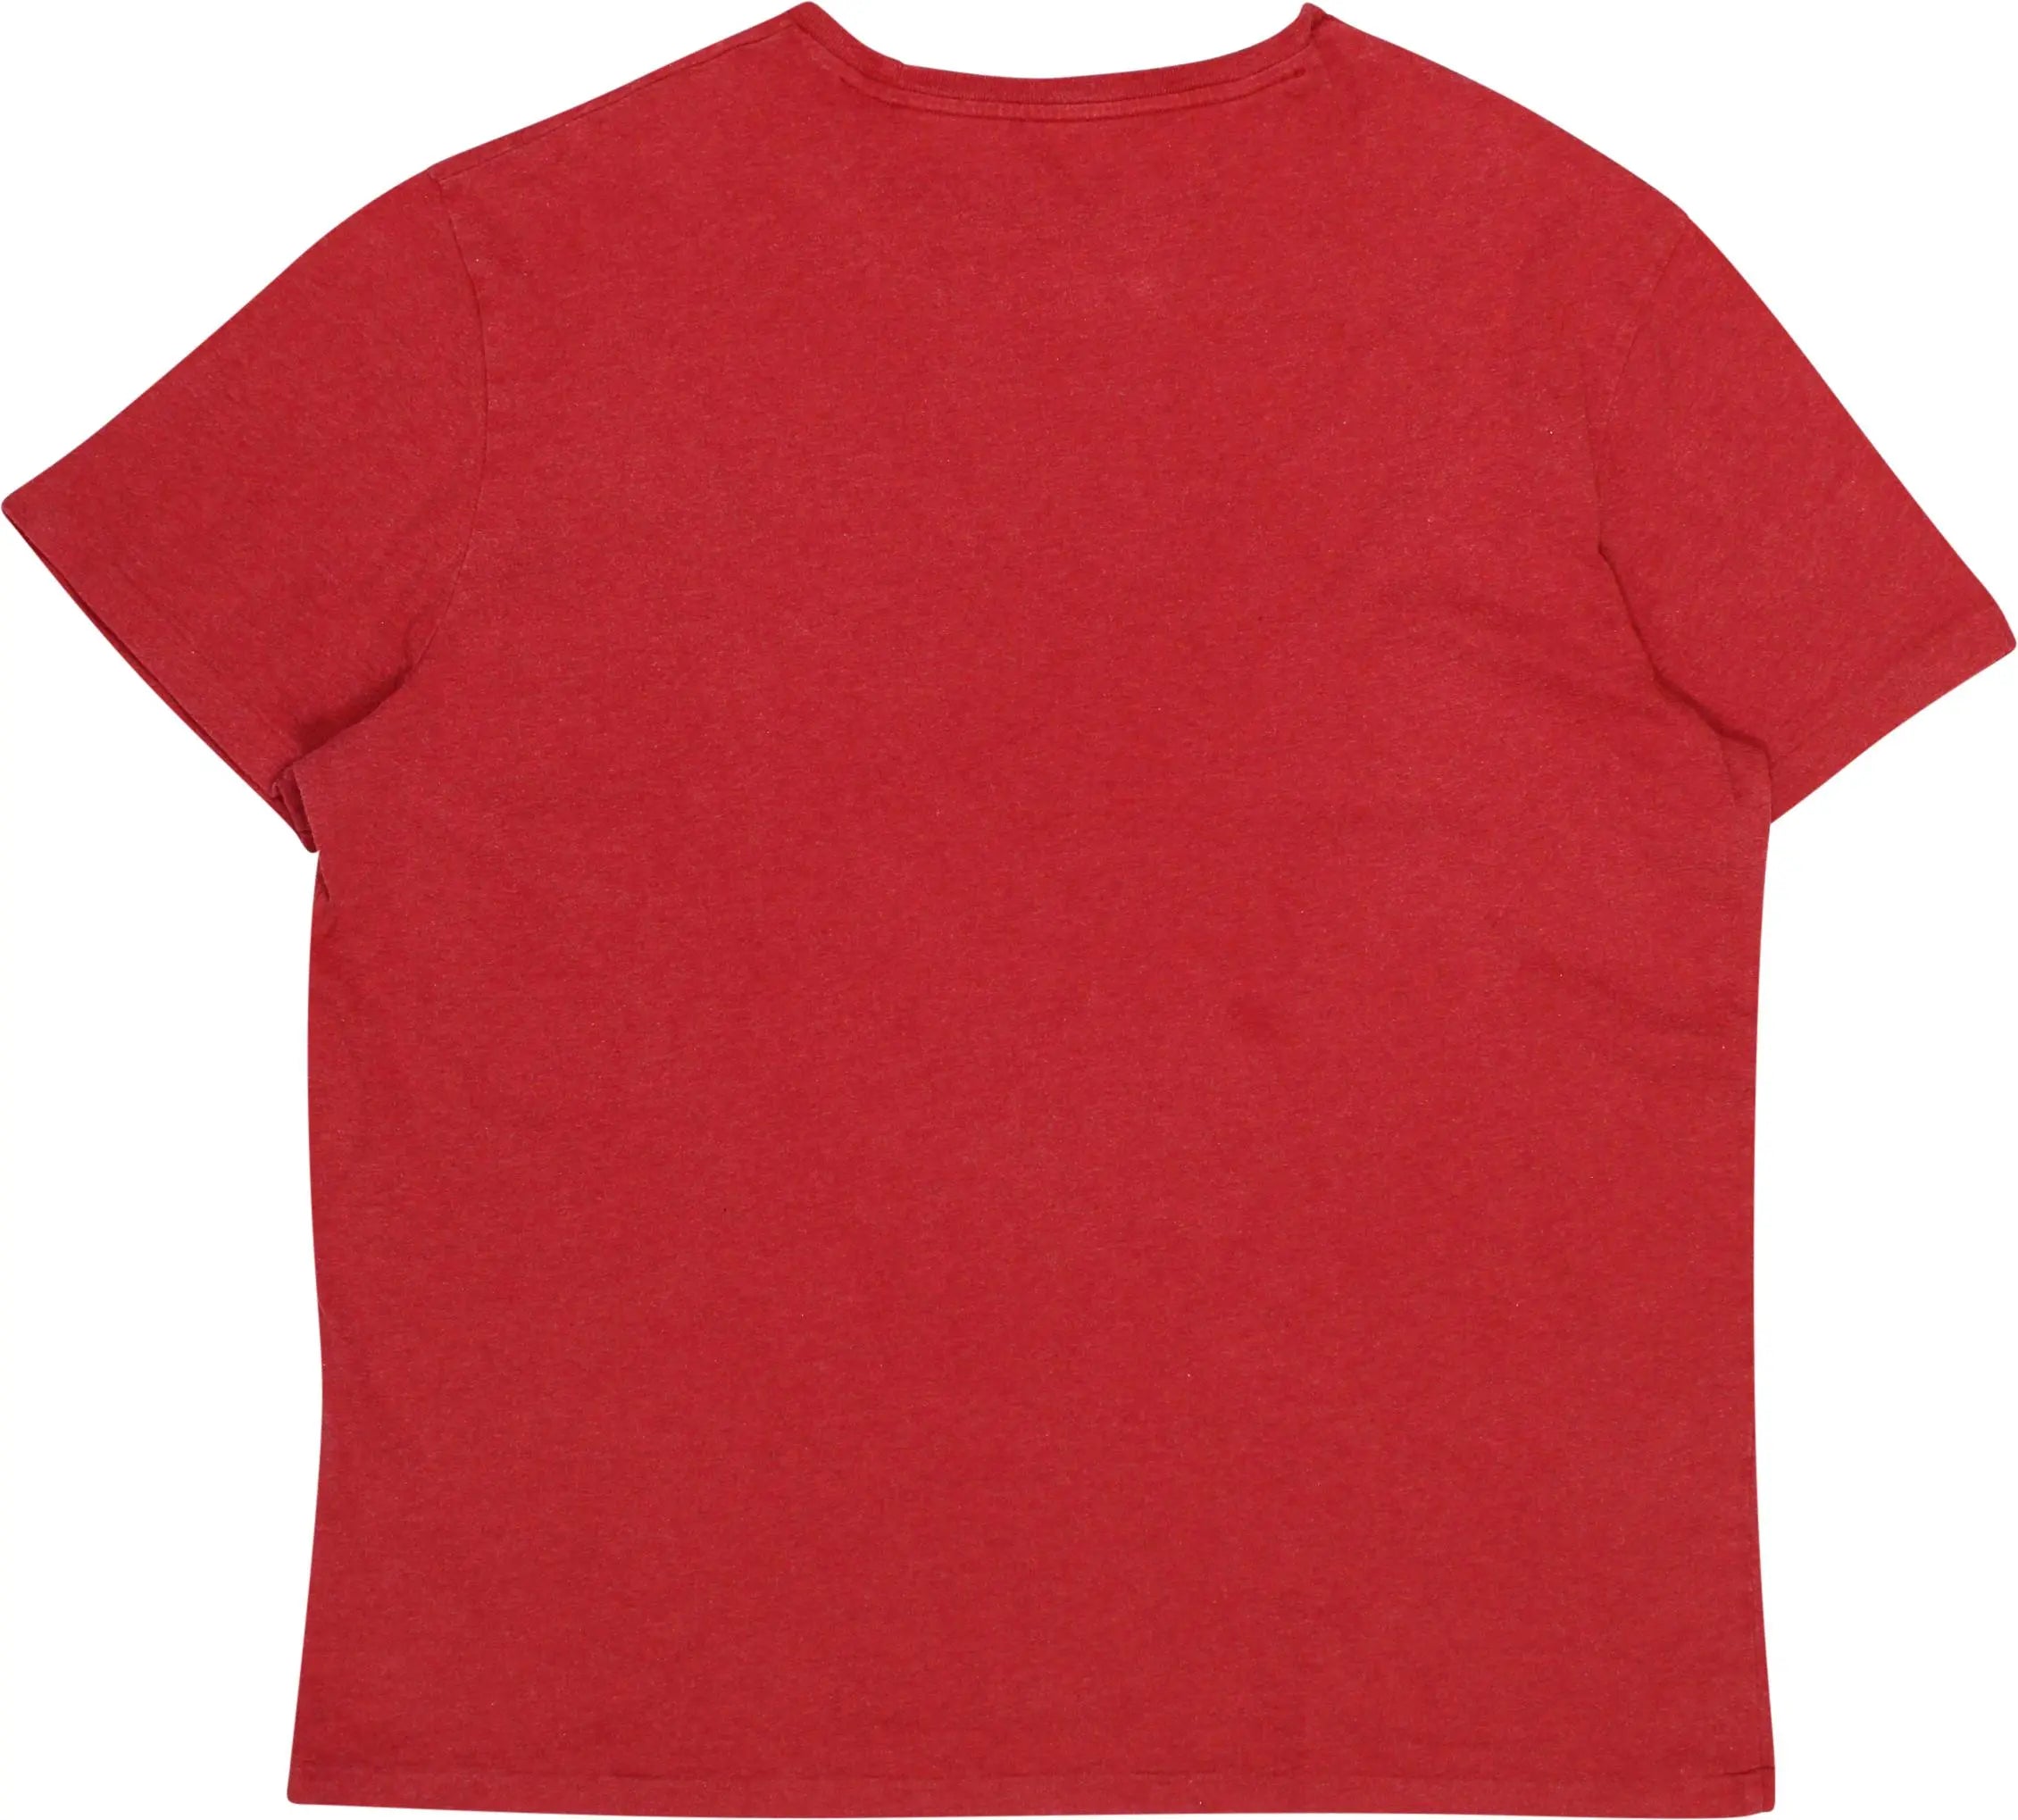 Ralph Lauren - Ralph Lauren T-shirt- ThriftTale.com - Vintage and second handclothing